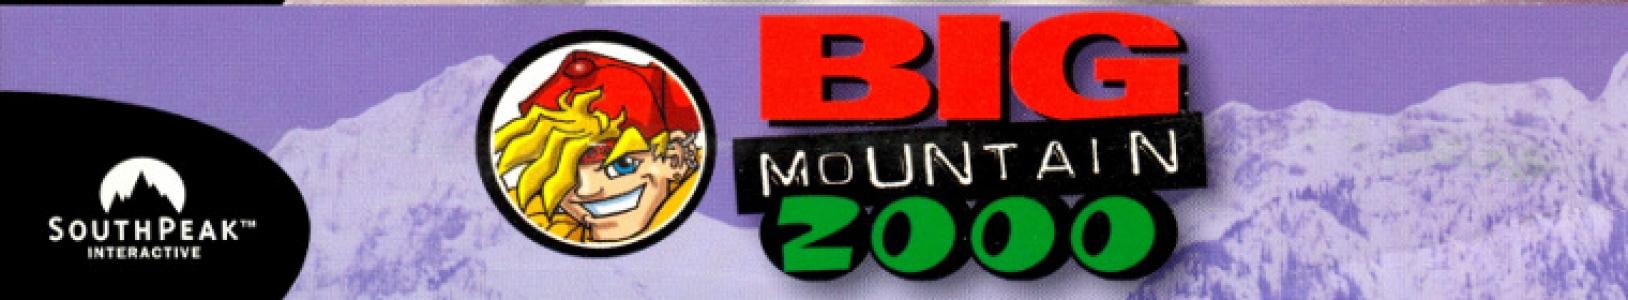 Big Mountain 2000 banner